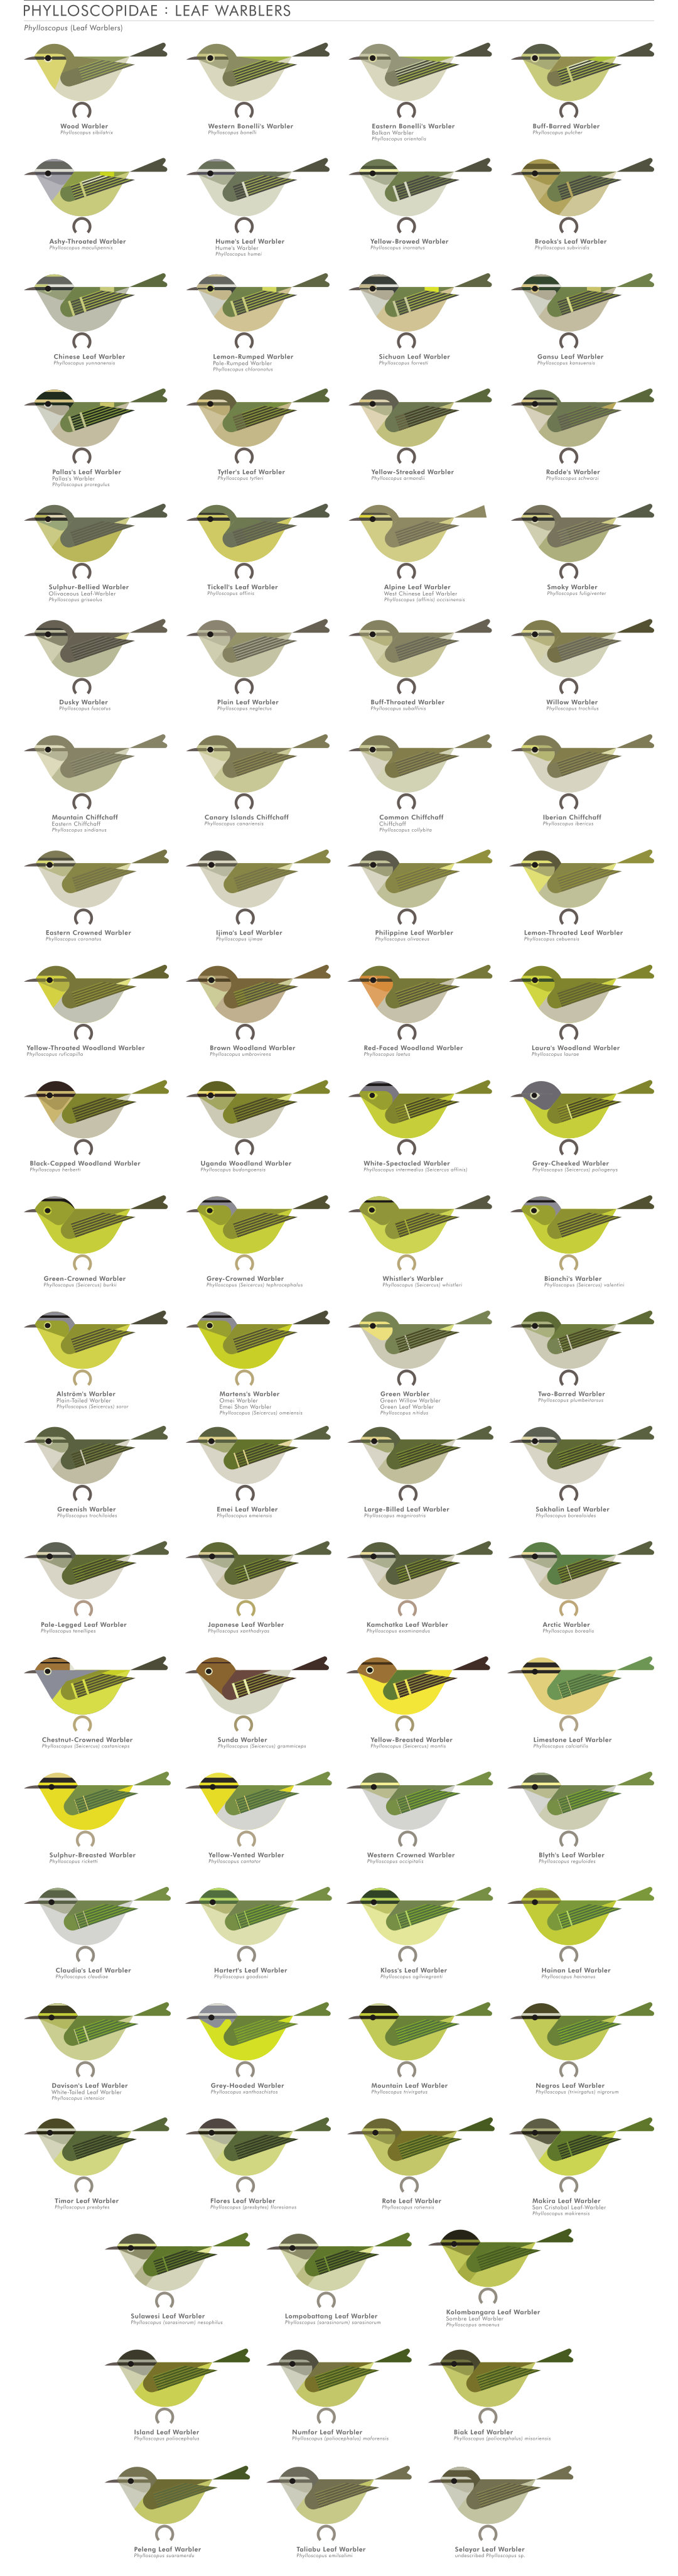 scott partridge - AVE - avian vector encyclopedia - leaf warblers - bird vector art